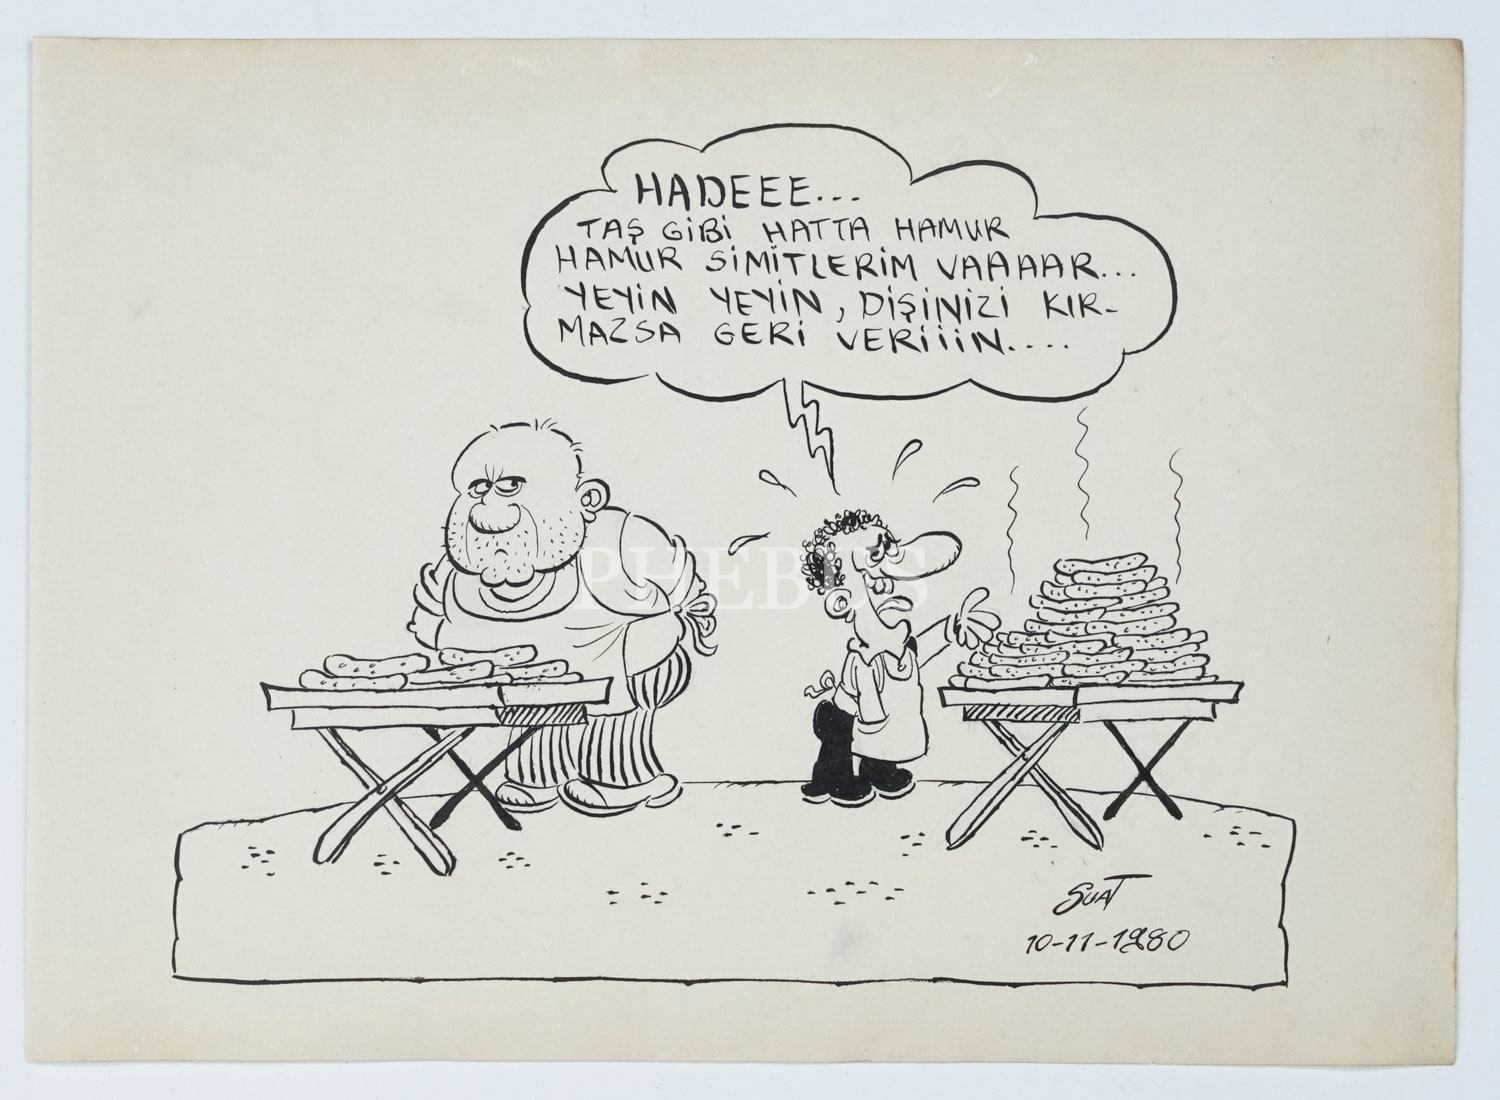 Suat imzalı, 10 Kasım 1980 tarihli karikatür, 33x24 cm...